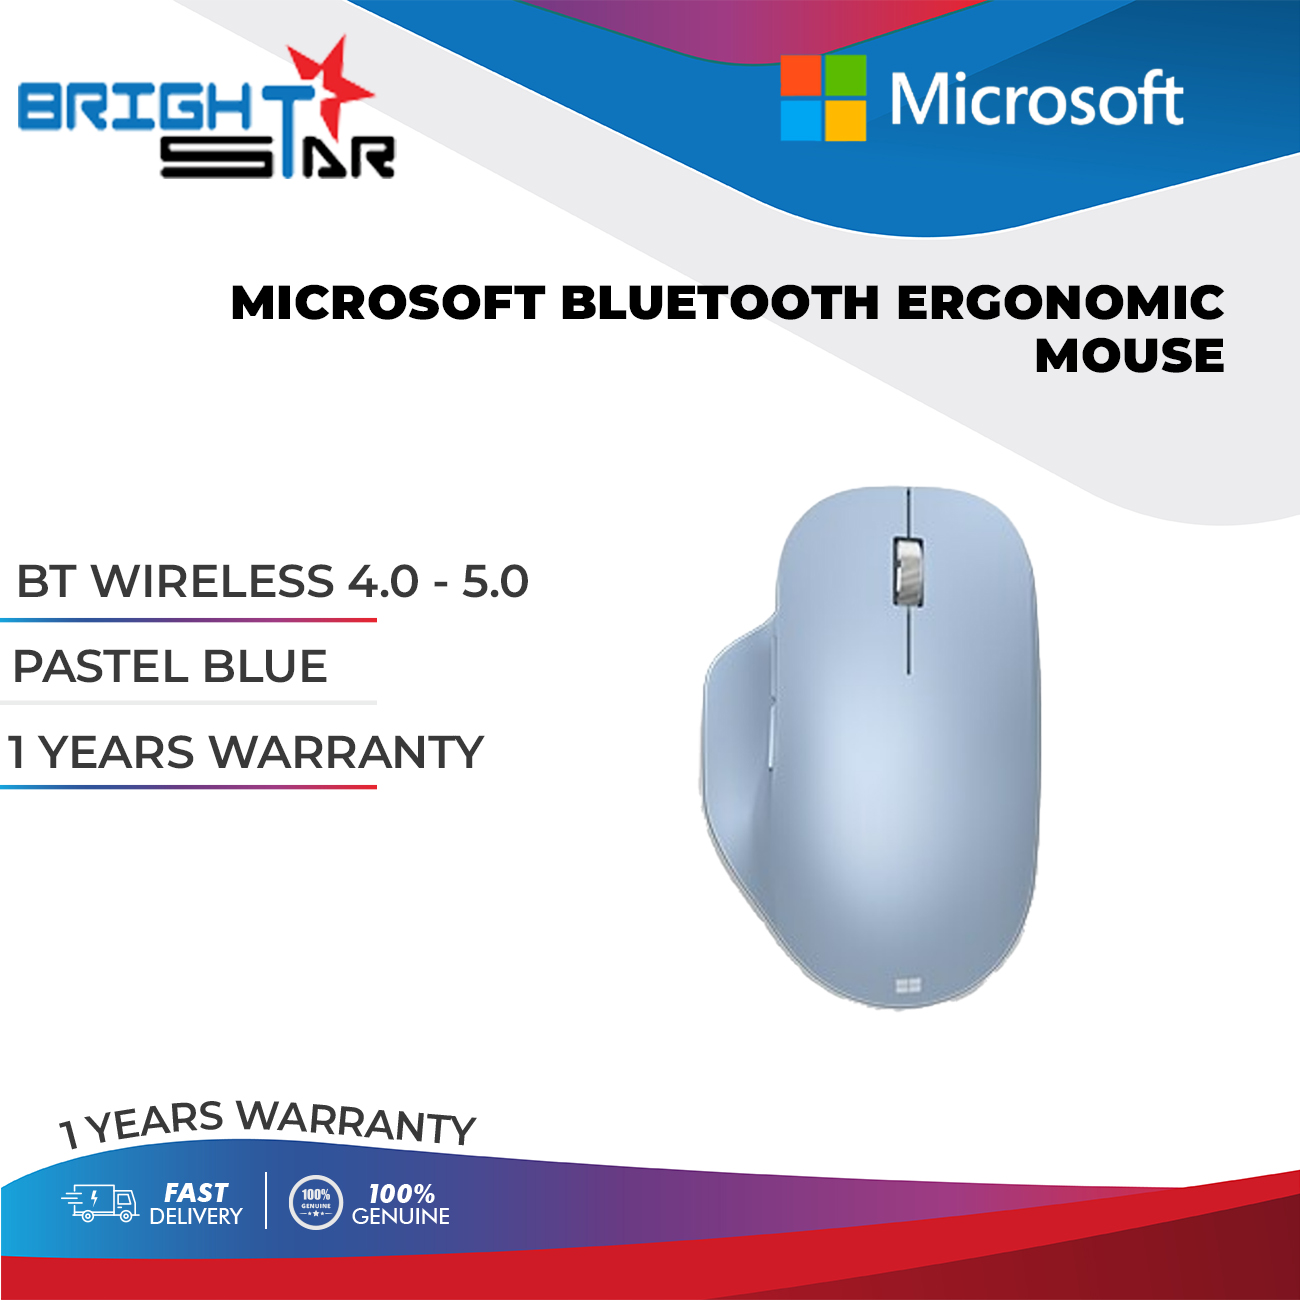 Microsoft Bluetooth Ergonomic Pastel Blue Mouse ⋆ Brightstar Computer